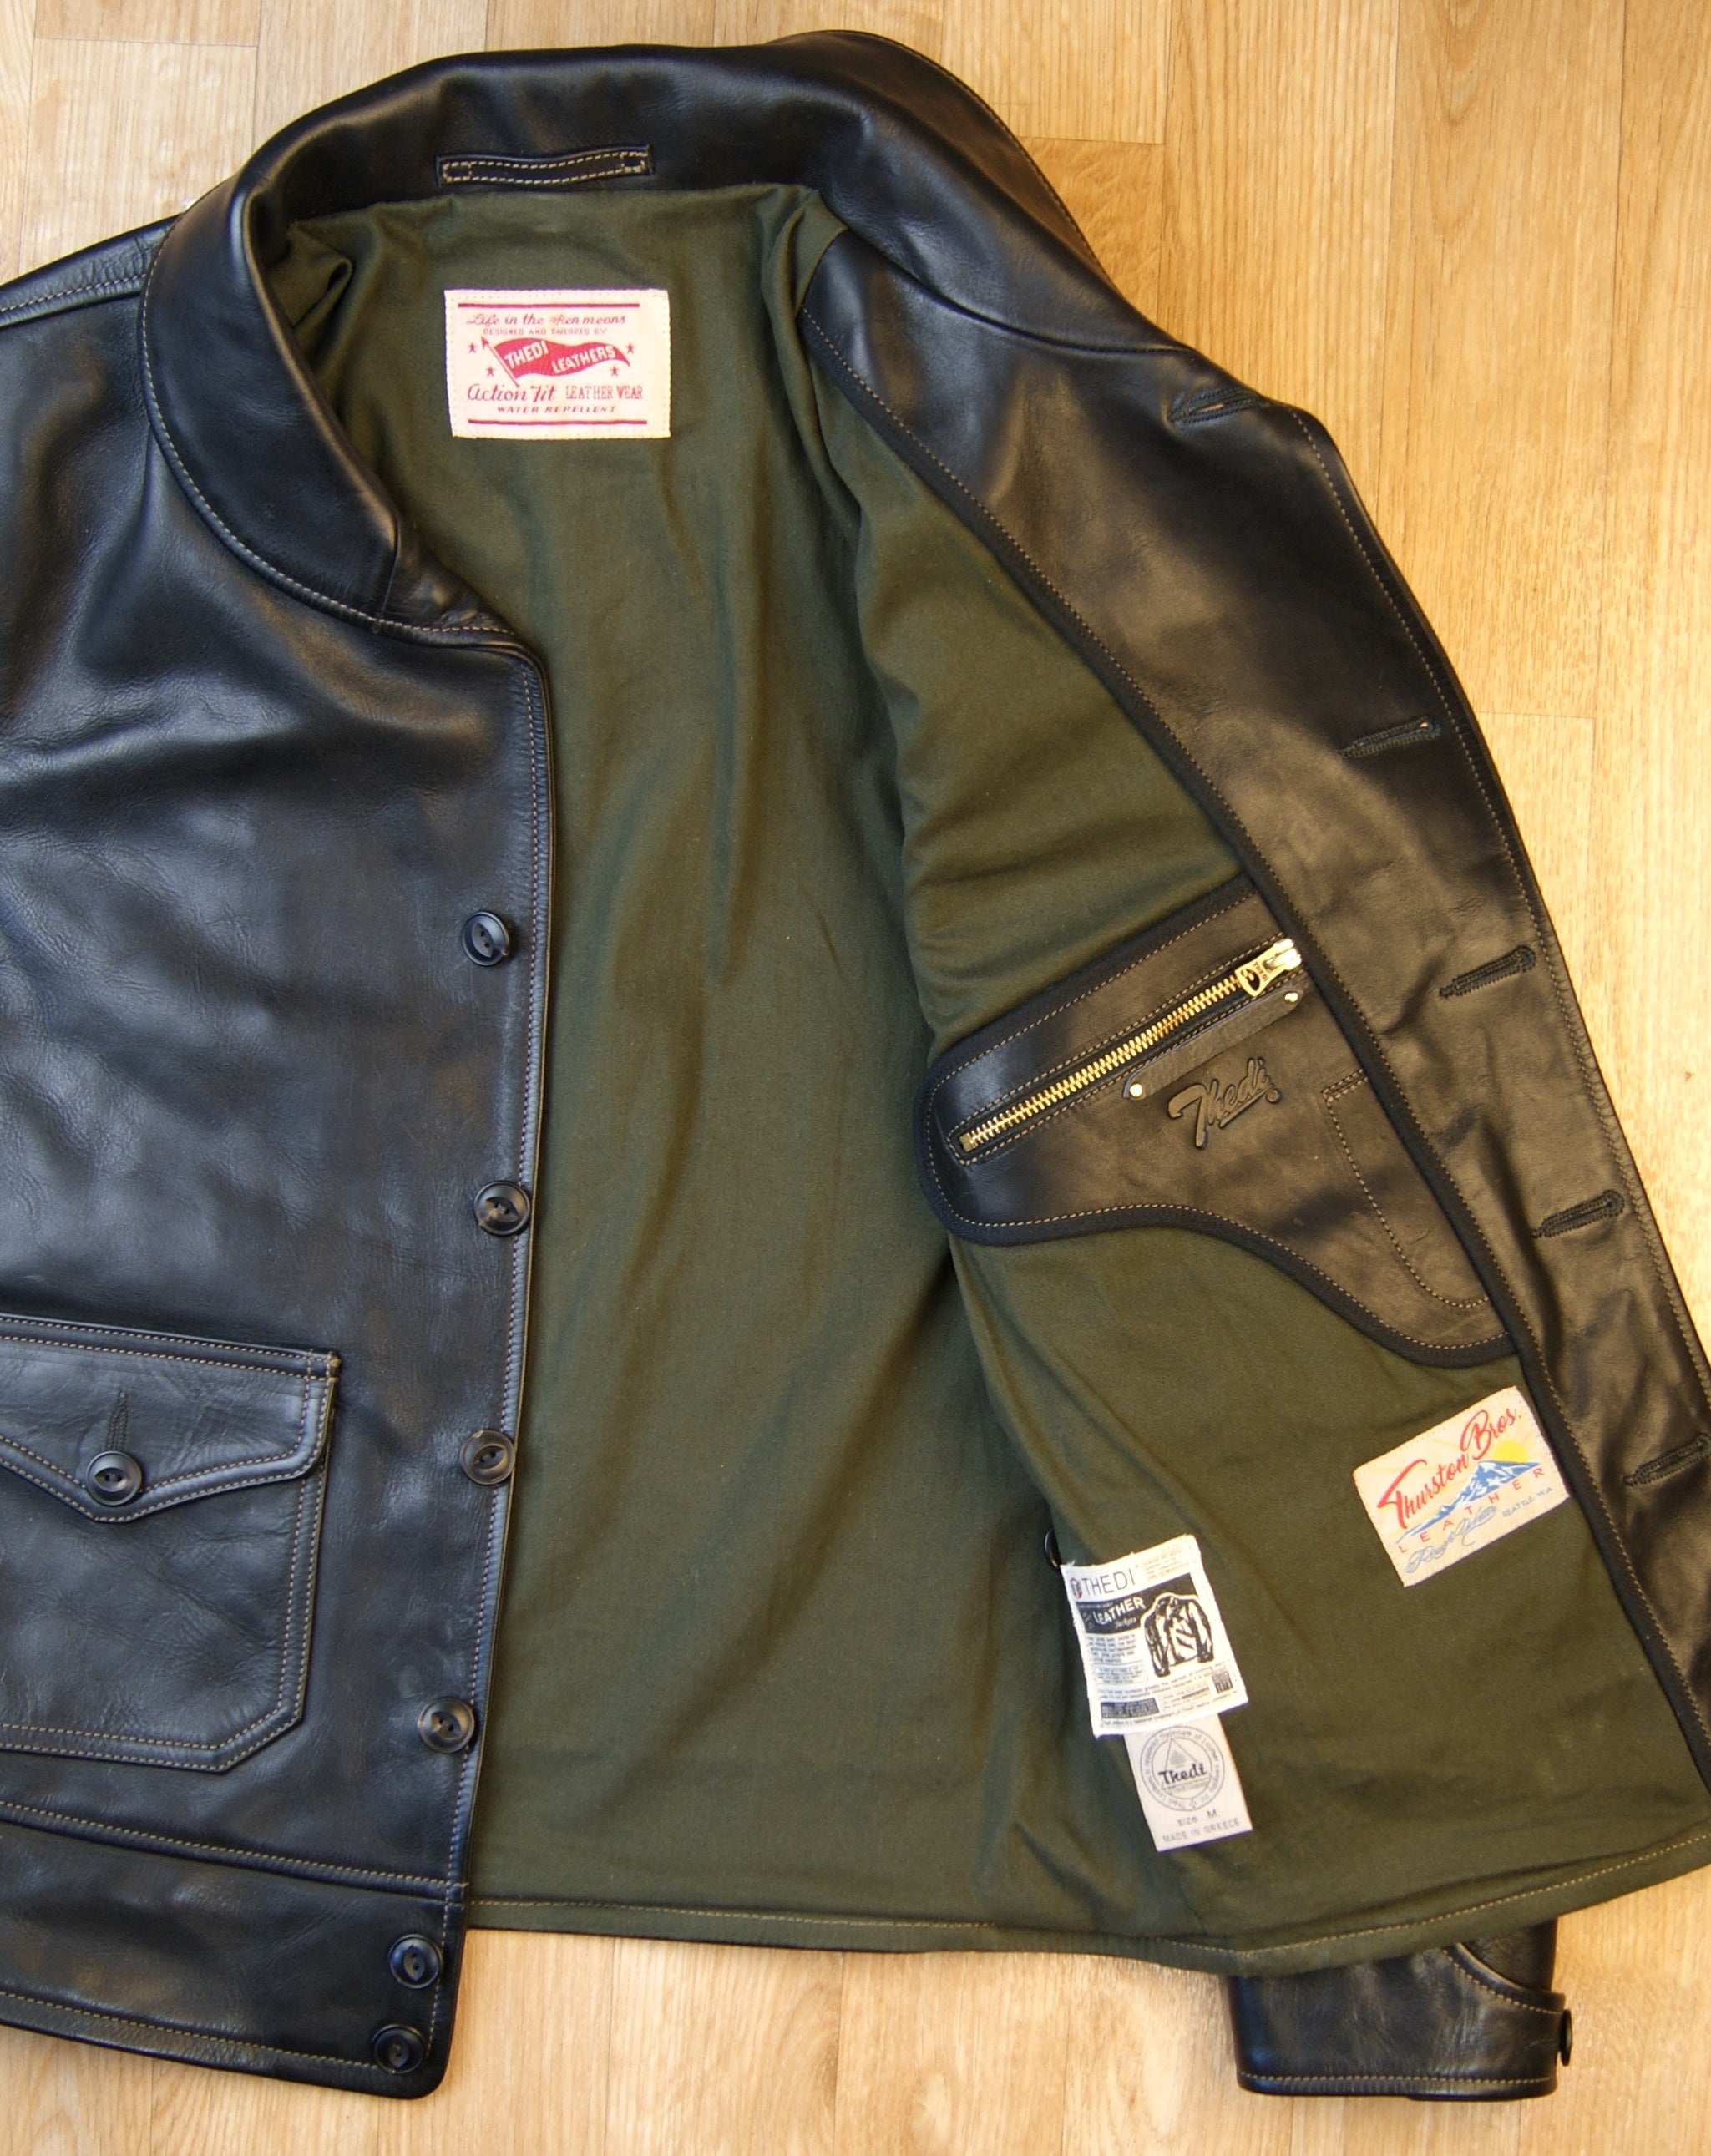 Thedi Button-Up Markos Jacket, size Medium, Black Cowhide